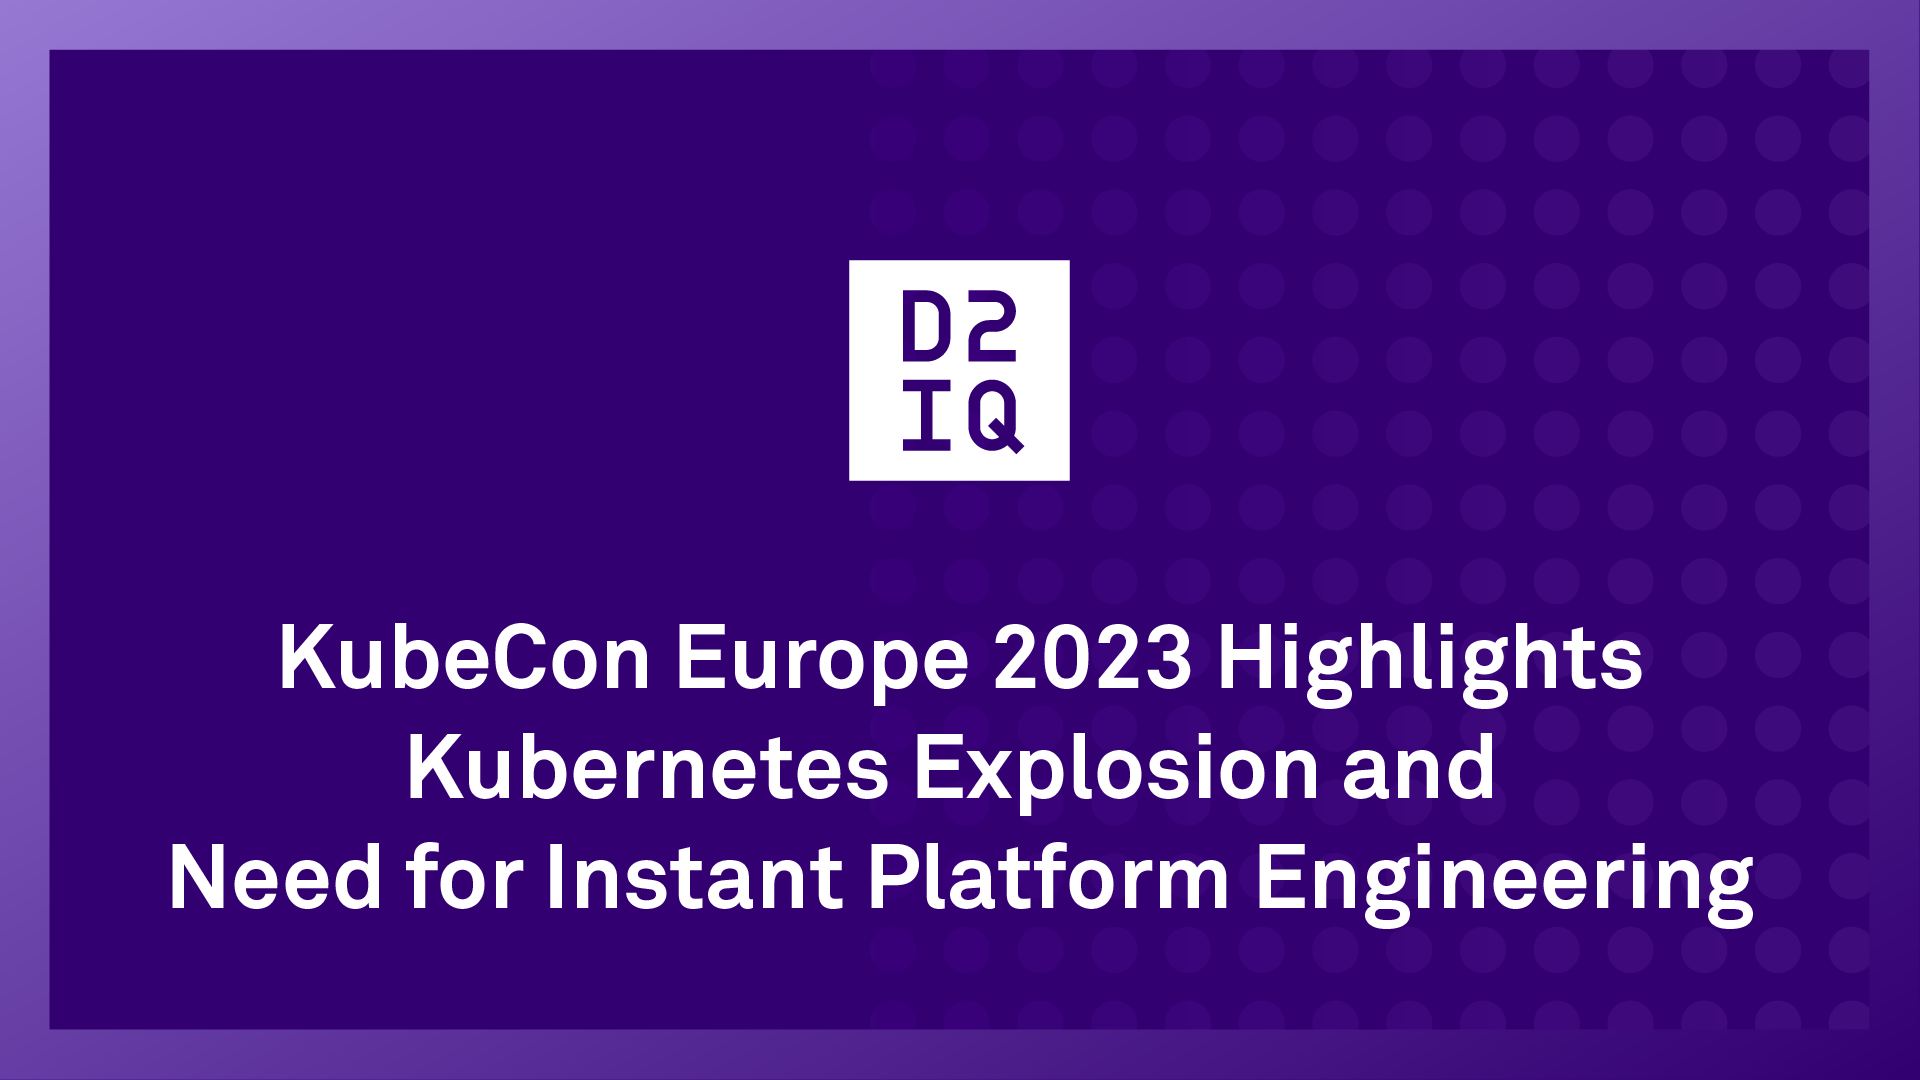 KubeCon Europe 2023 Highlights: Instant Platform Engineering